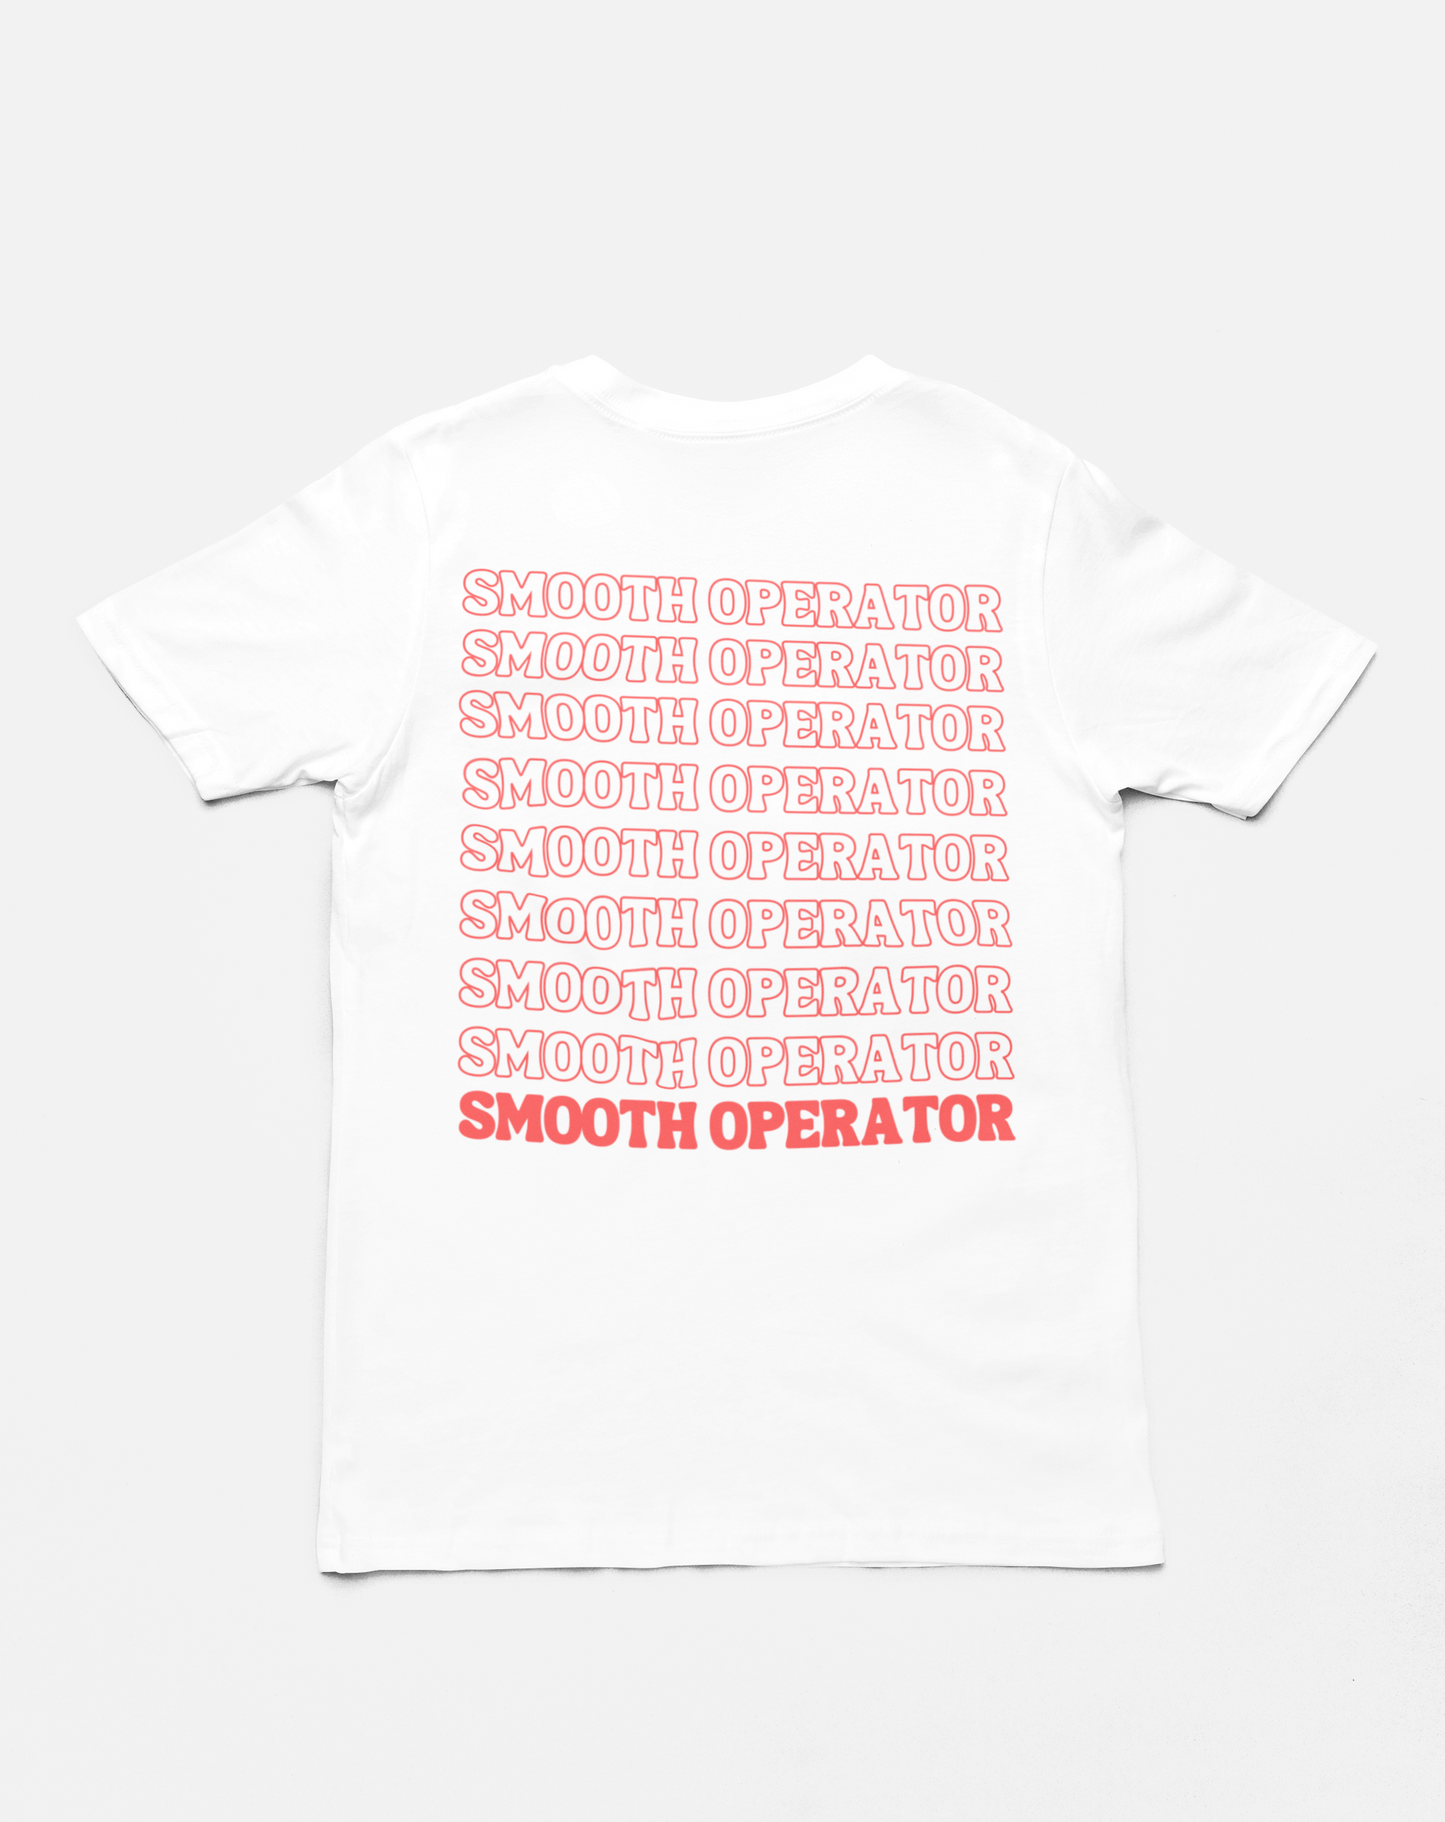 Smooth Operator T-Shirt